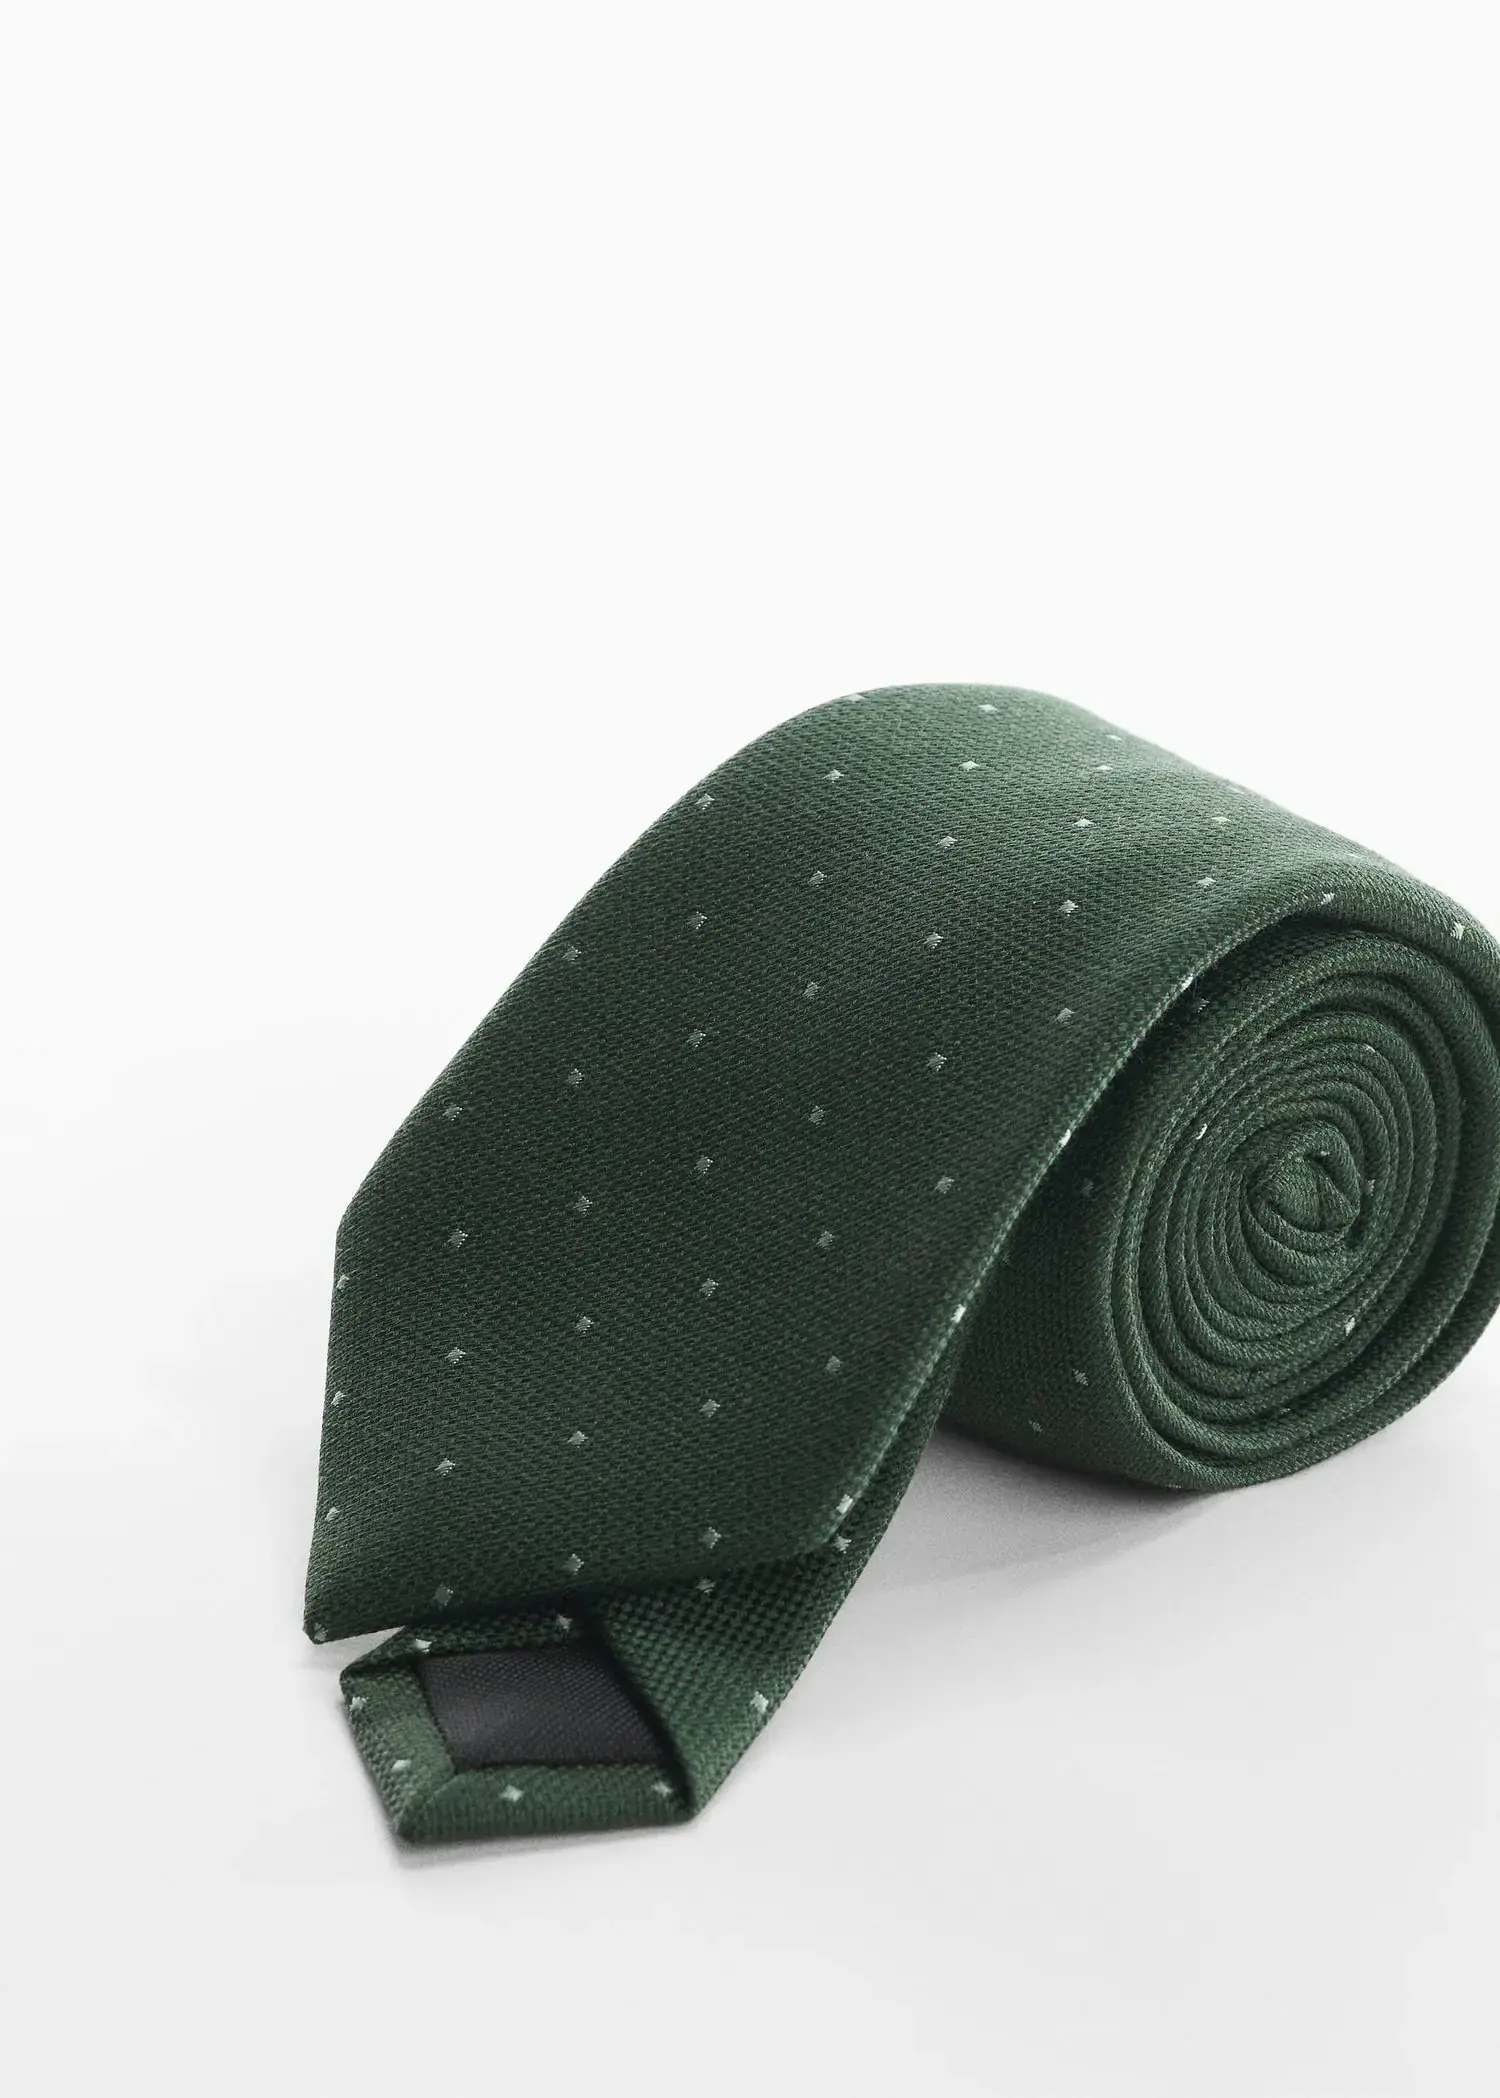 Mango Strukturierte Krawatte mit Mini-Polka Dots. 2